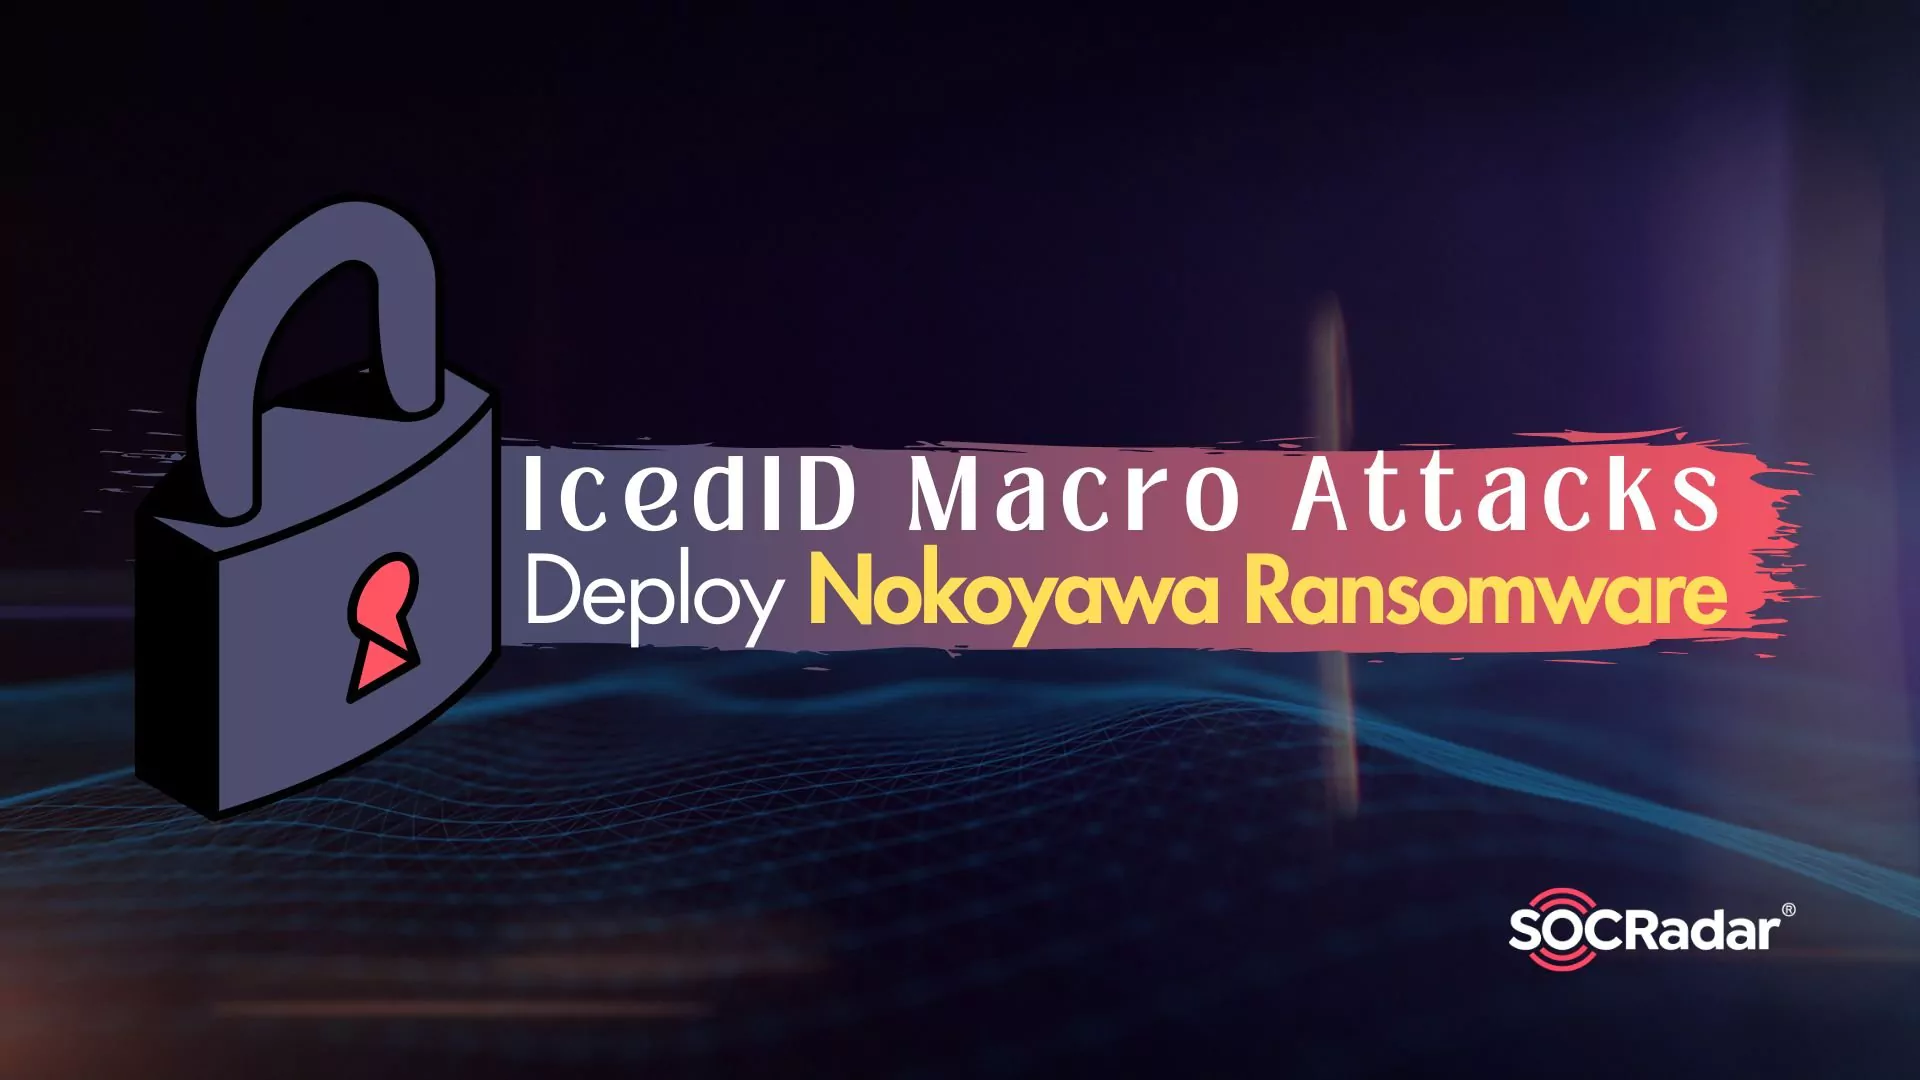 SOCRadar® Cyber Intelligence Inc. | IcedID Macro Attacks Deploy Nokoyawa Ransomware